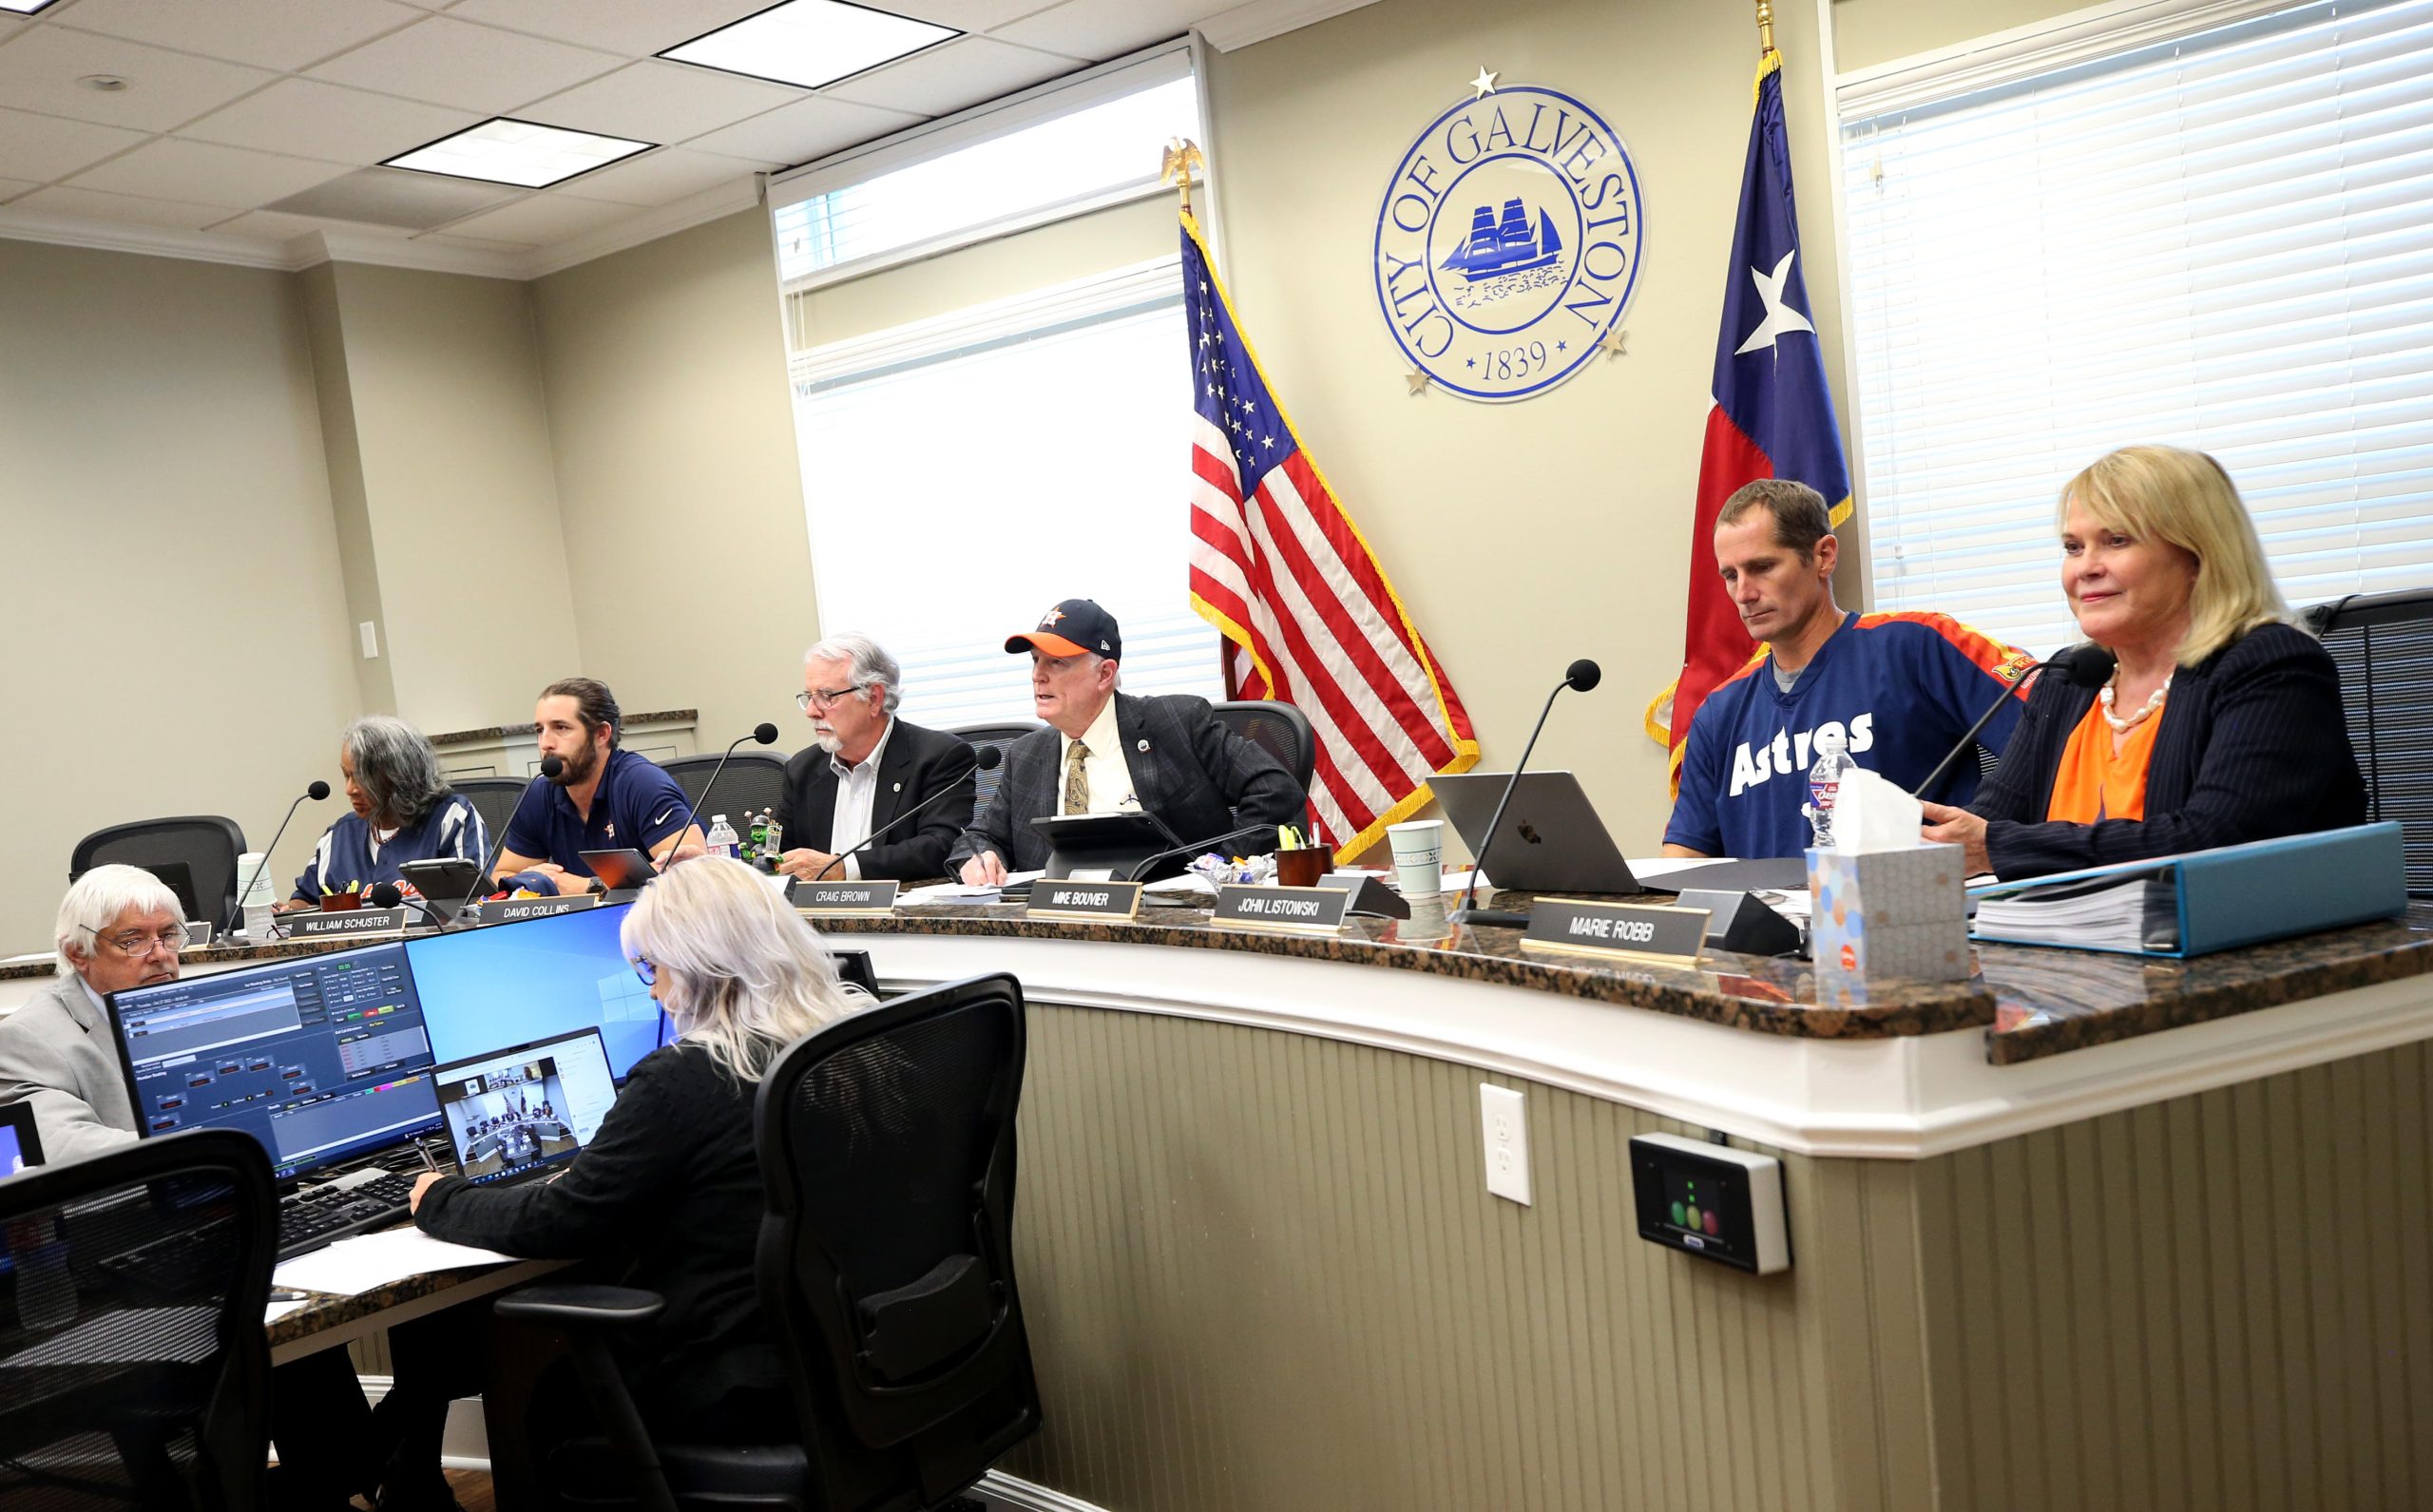 Galveston Mayor Craig Brown and City Council